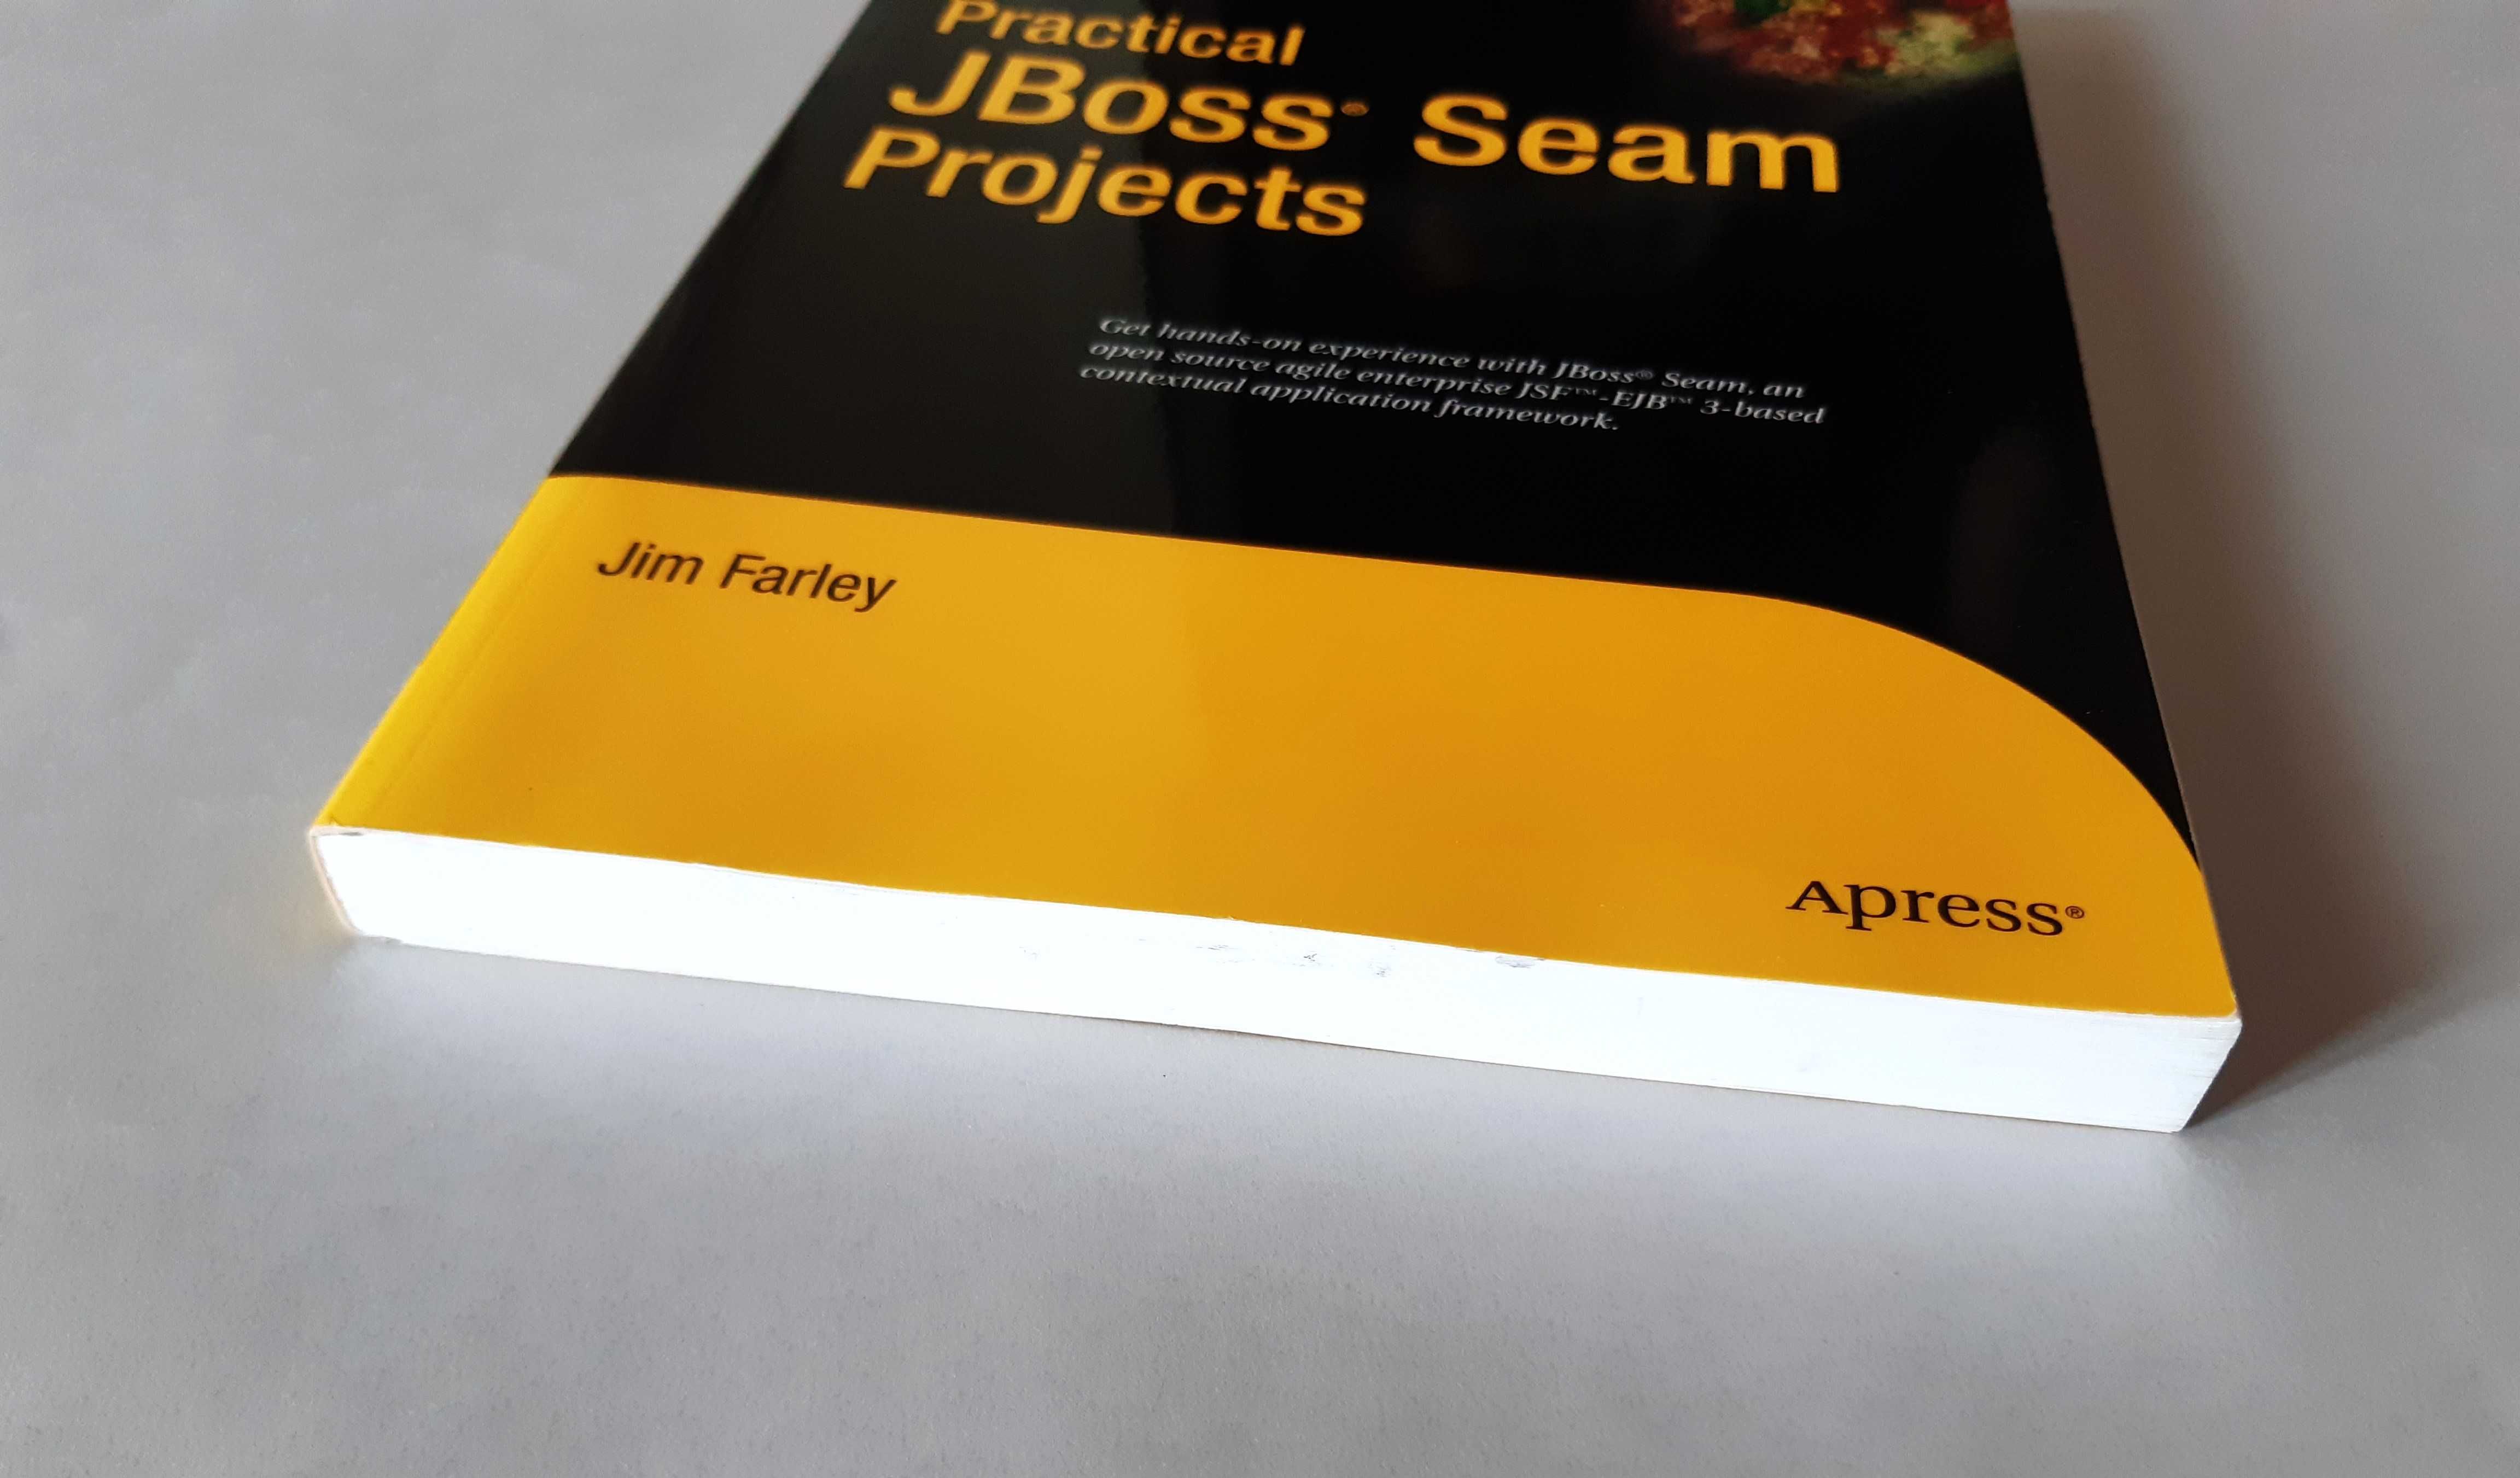 Practical JBoss Seam Projects Jim Farley